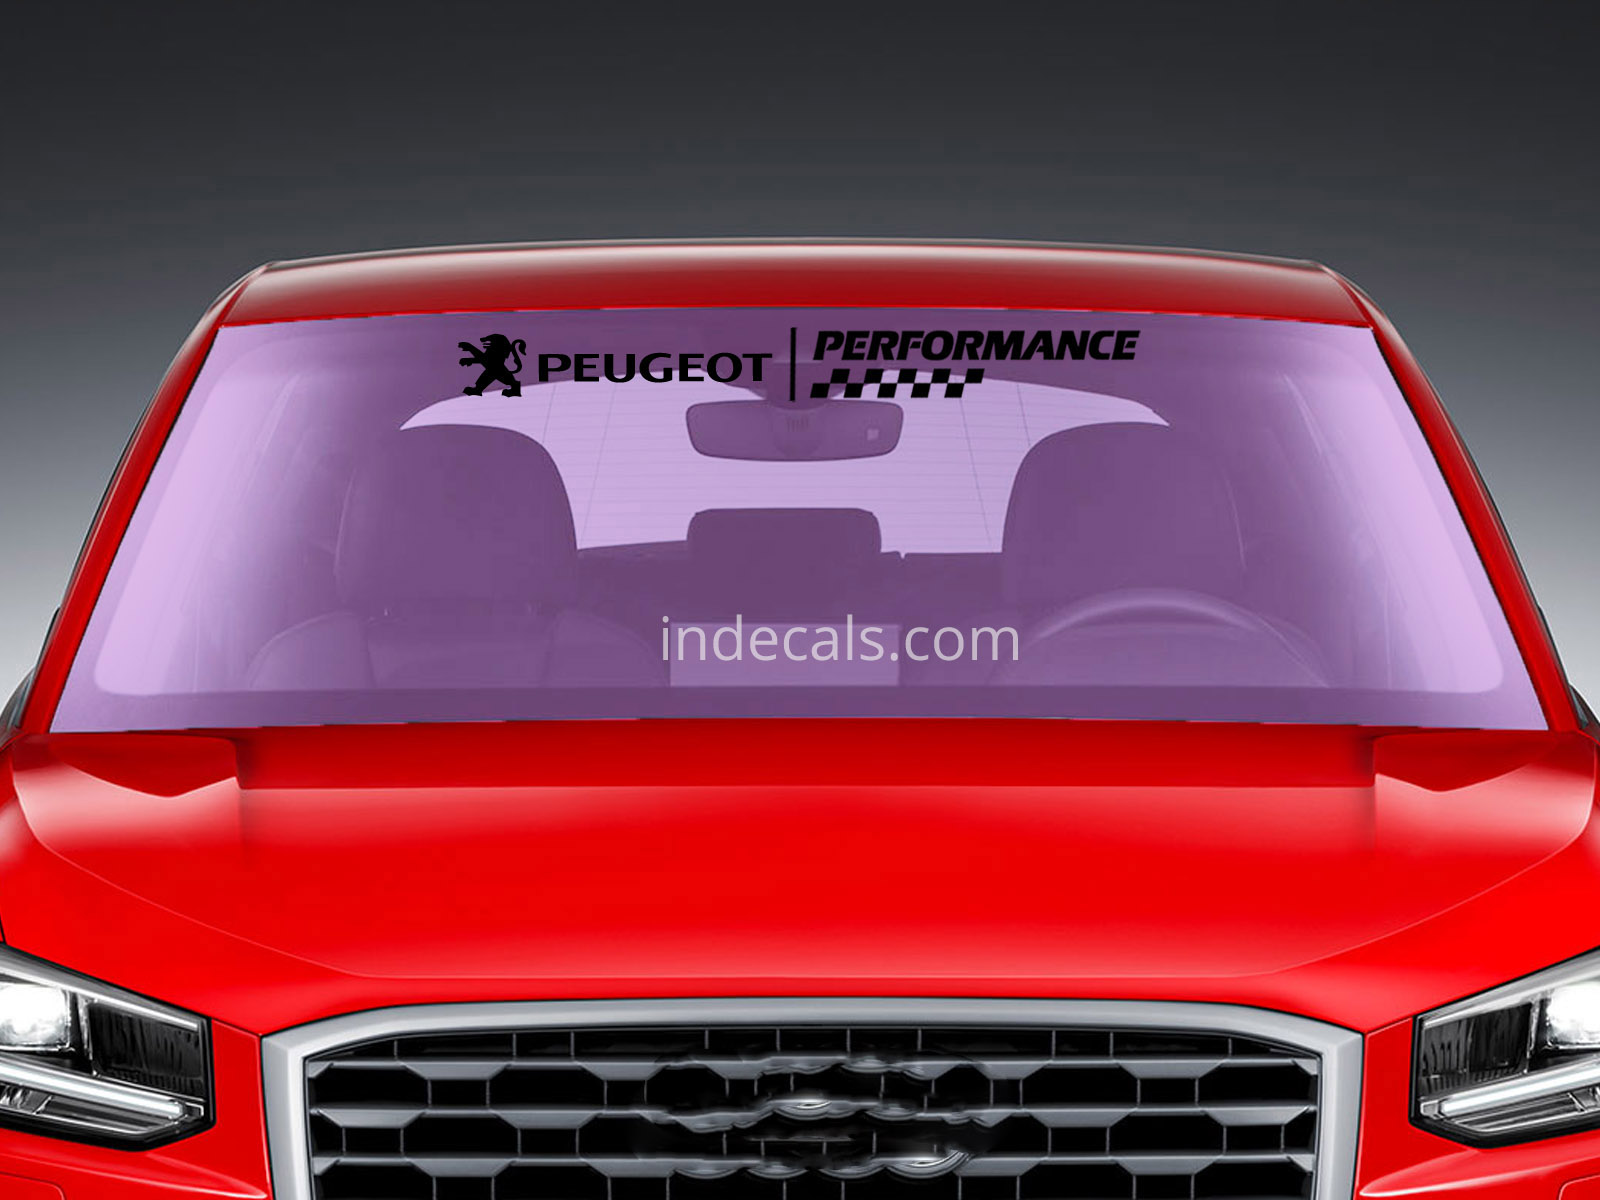 1 x Peugeot Performance Sticker for Windshield or Back Window - Black